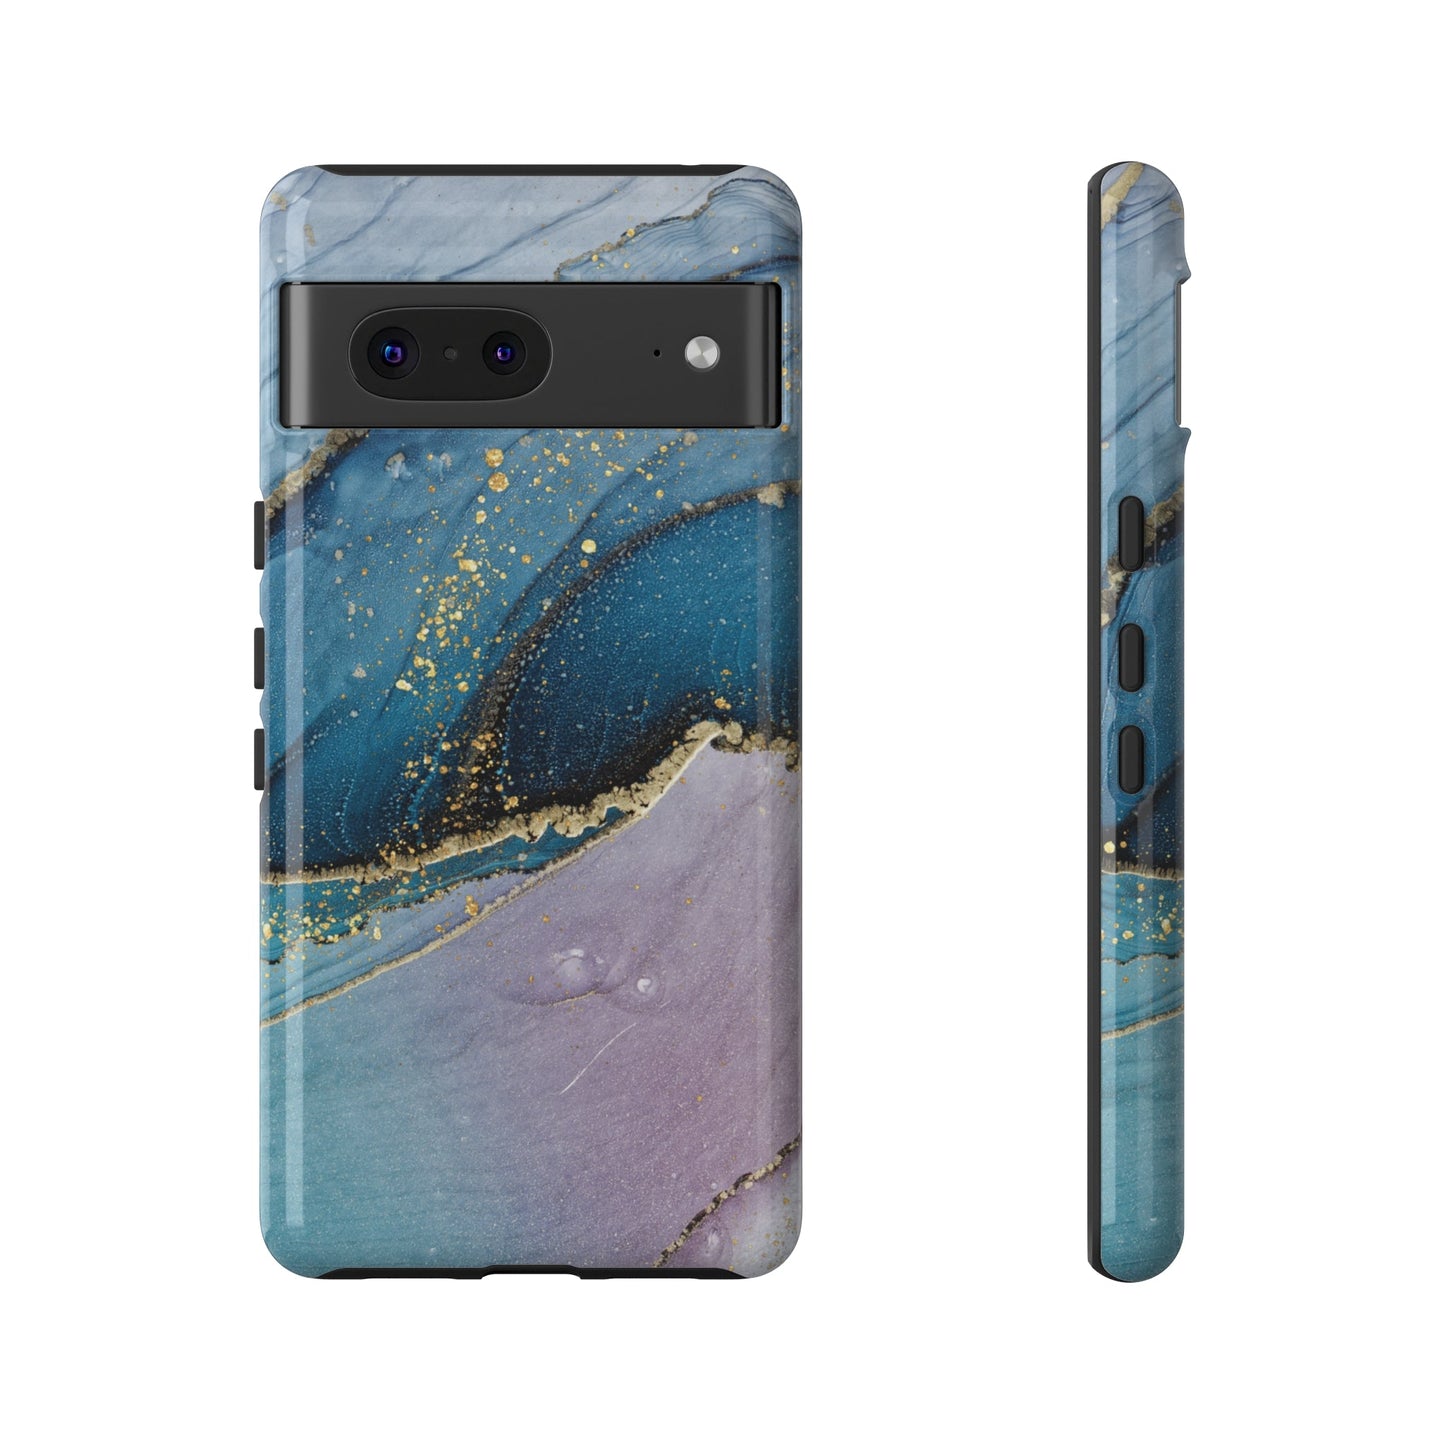 Beautiful Phone case fits iPhone Samsung Galaxy Google Pixel - Cheerful Lane